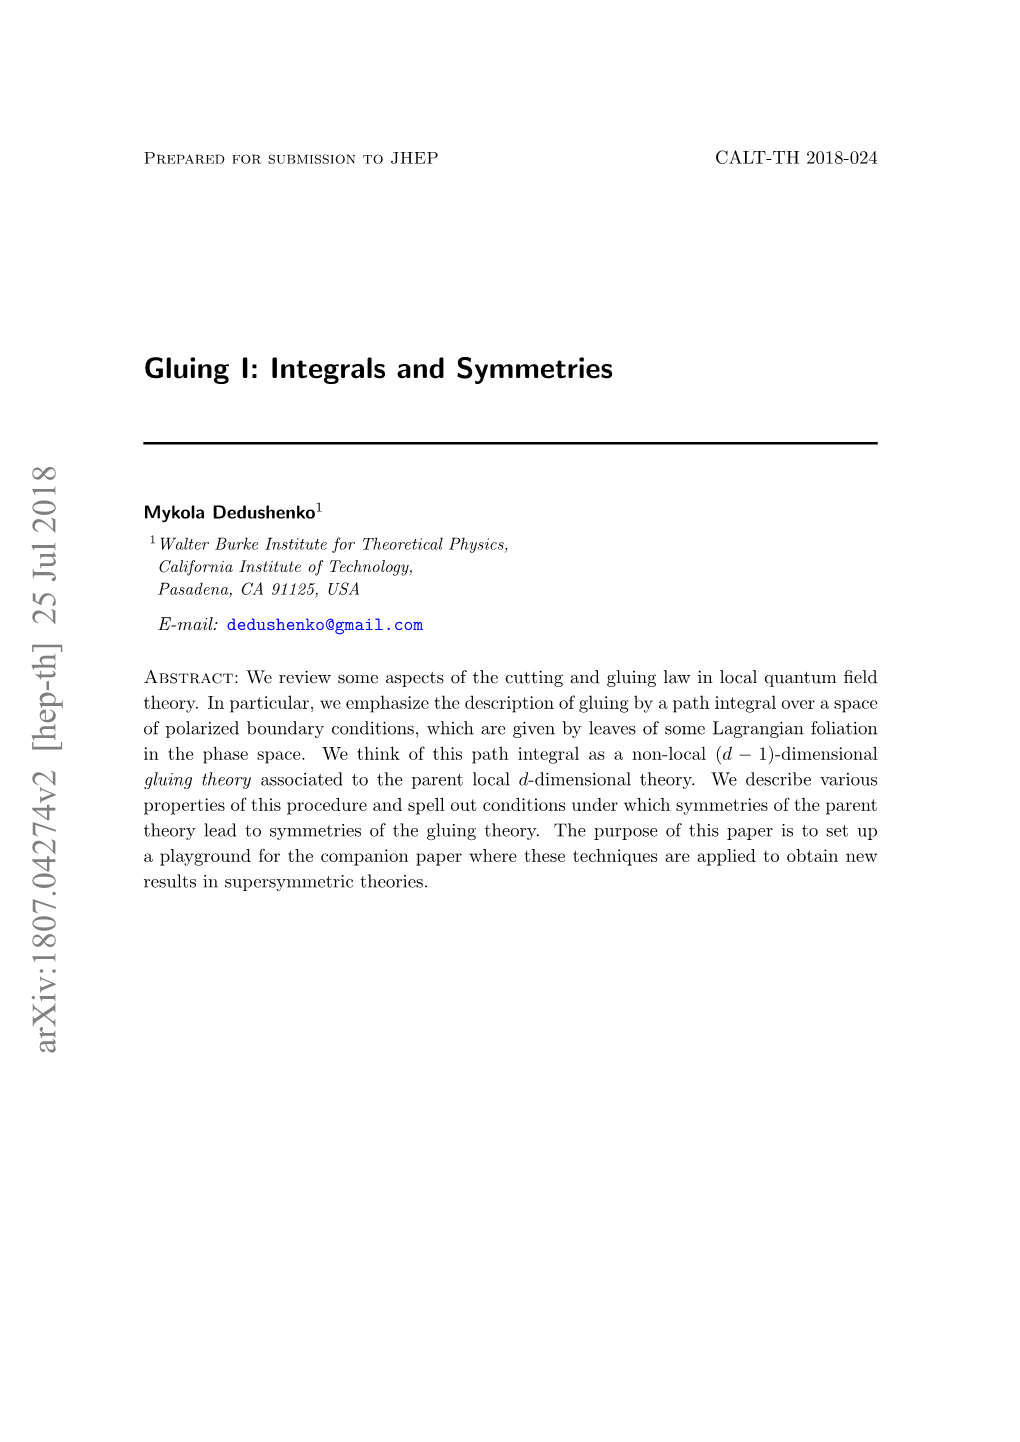 Gluing I: Integrals and Symmetries